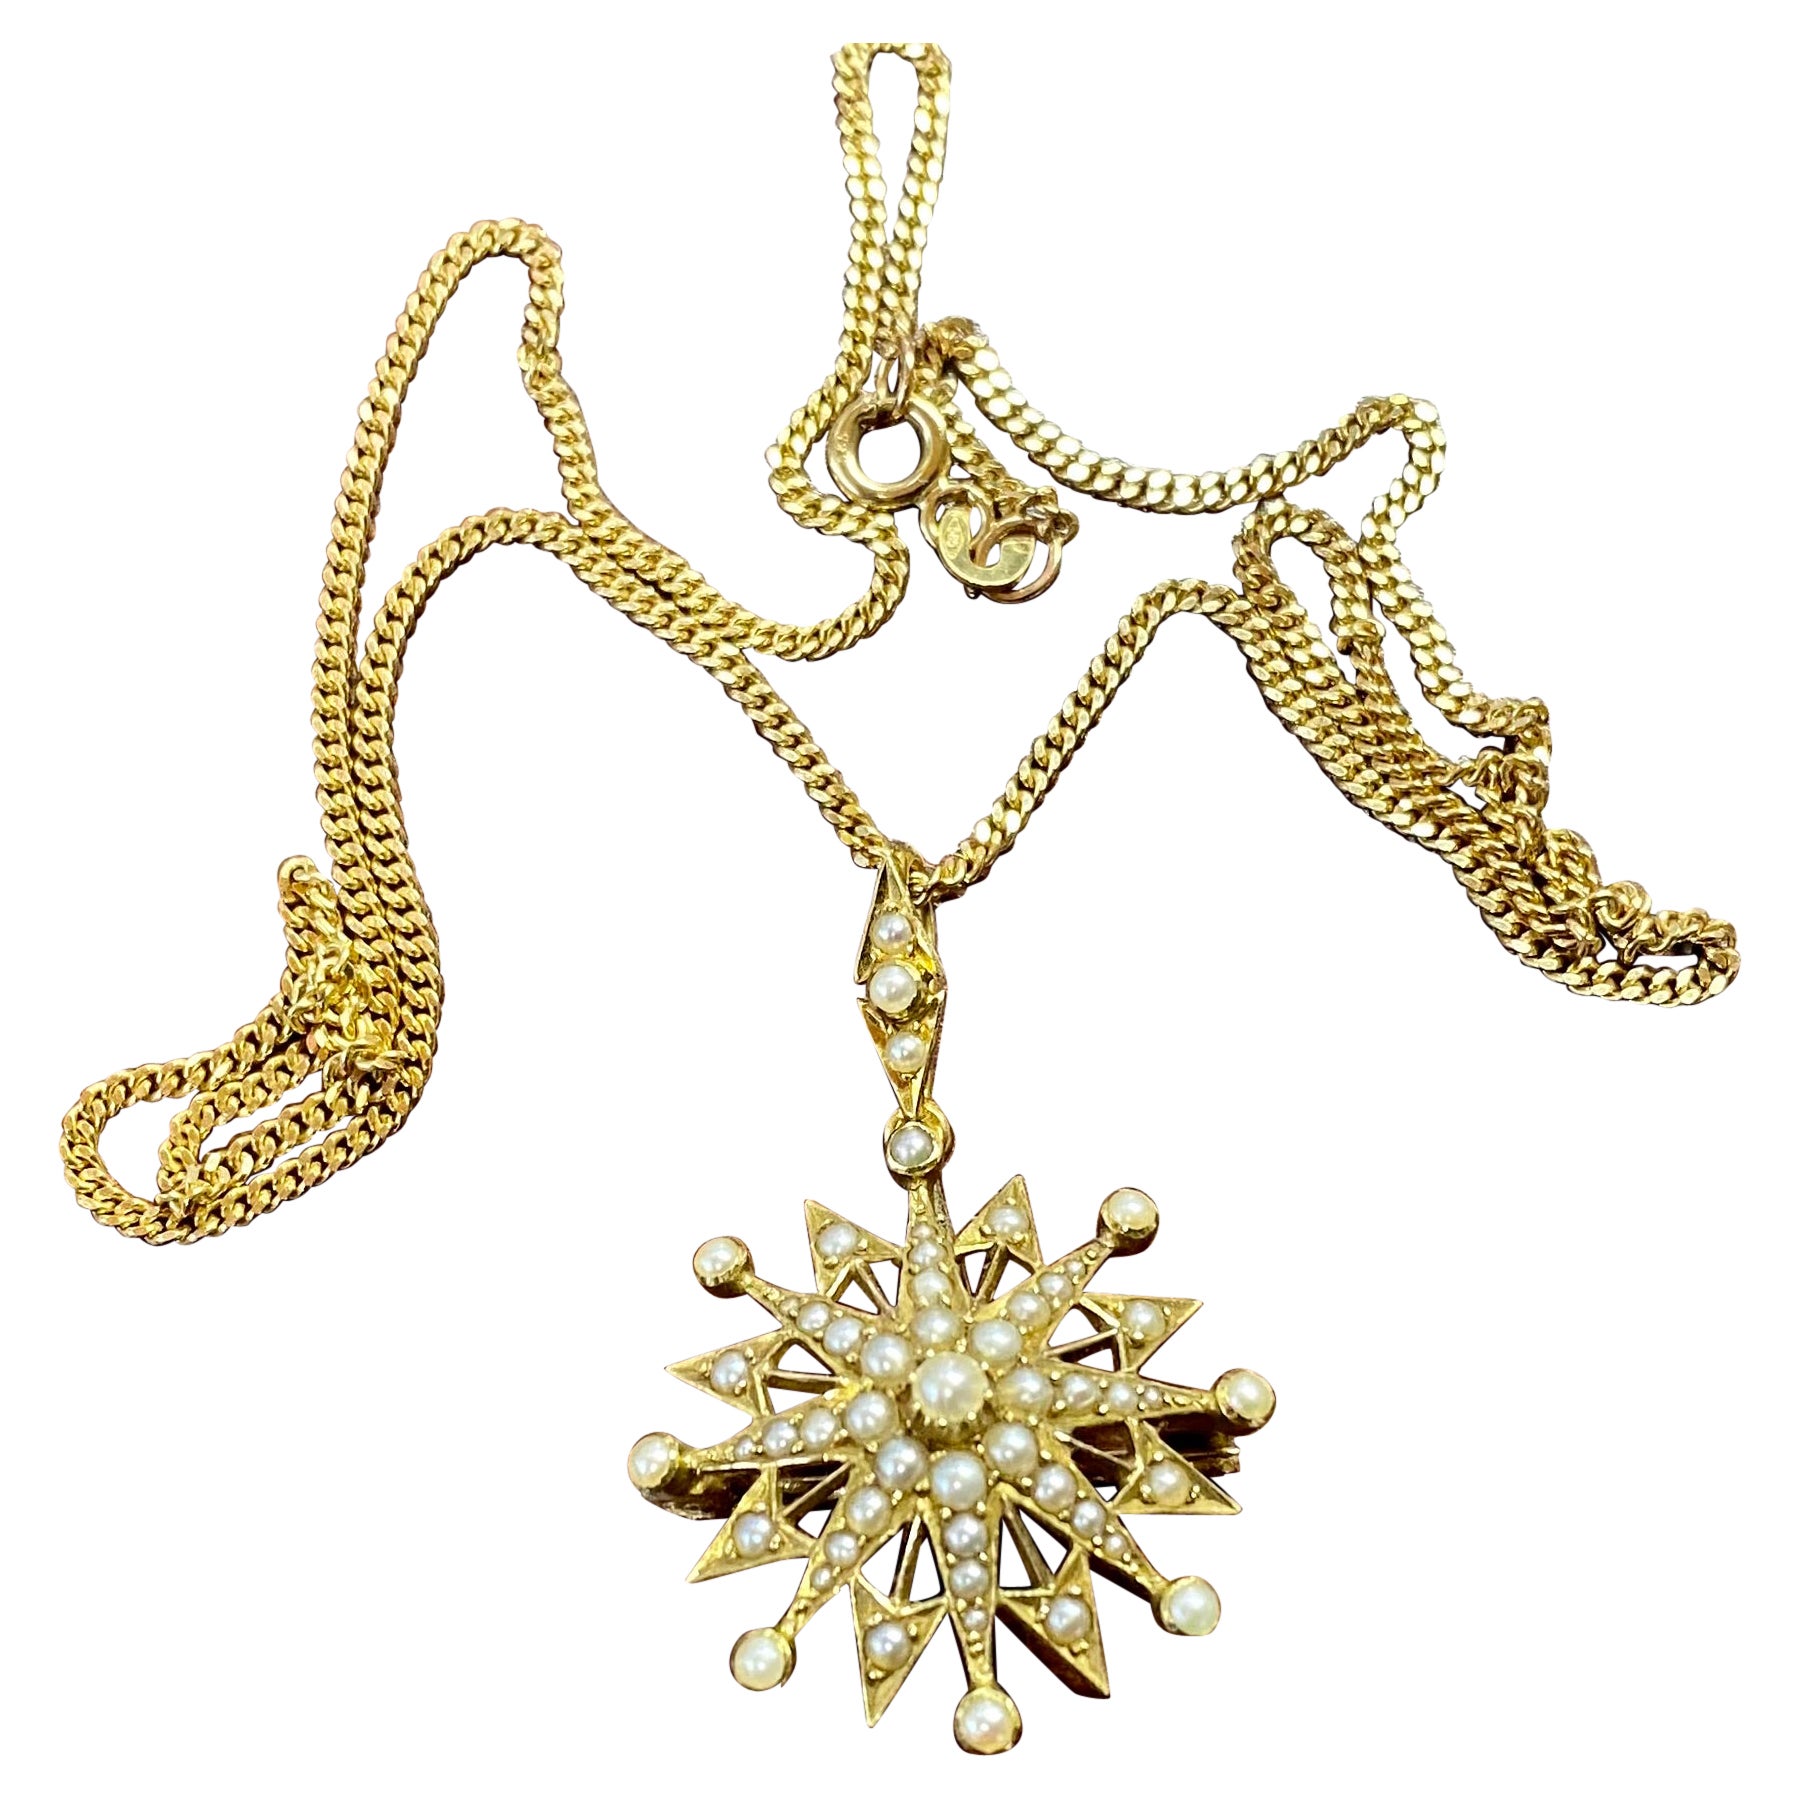 14 Karat Gold Star Pendant with Pearls.